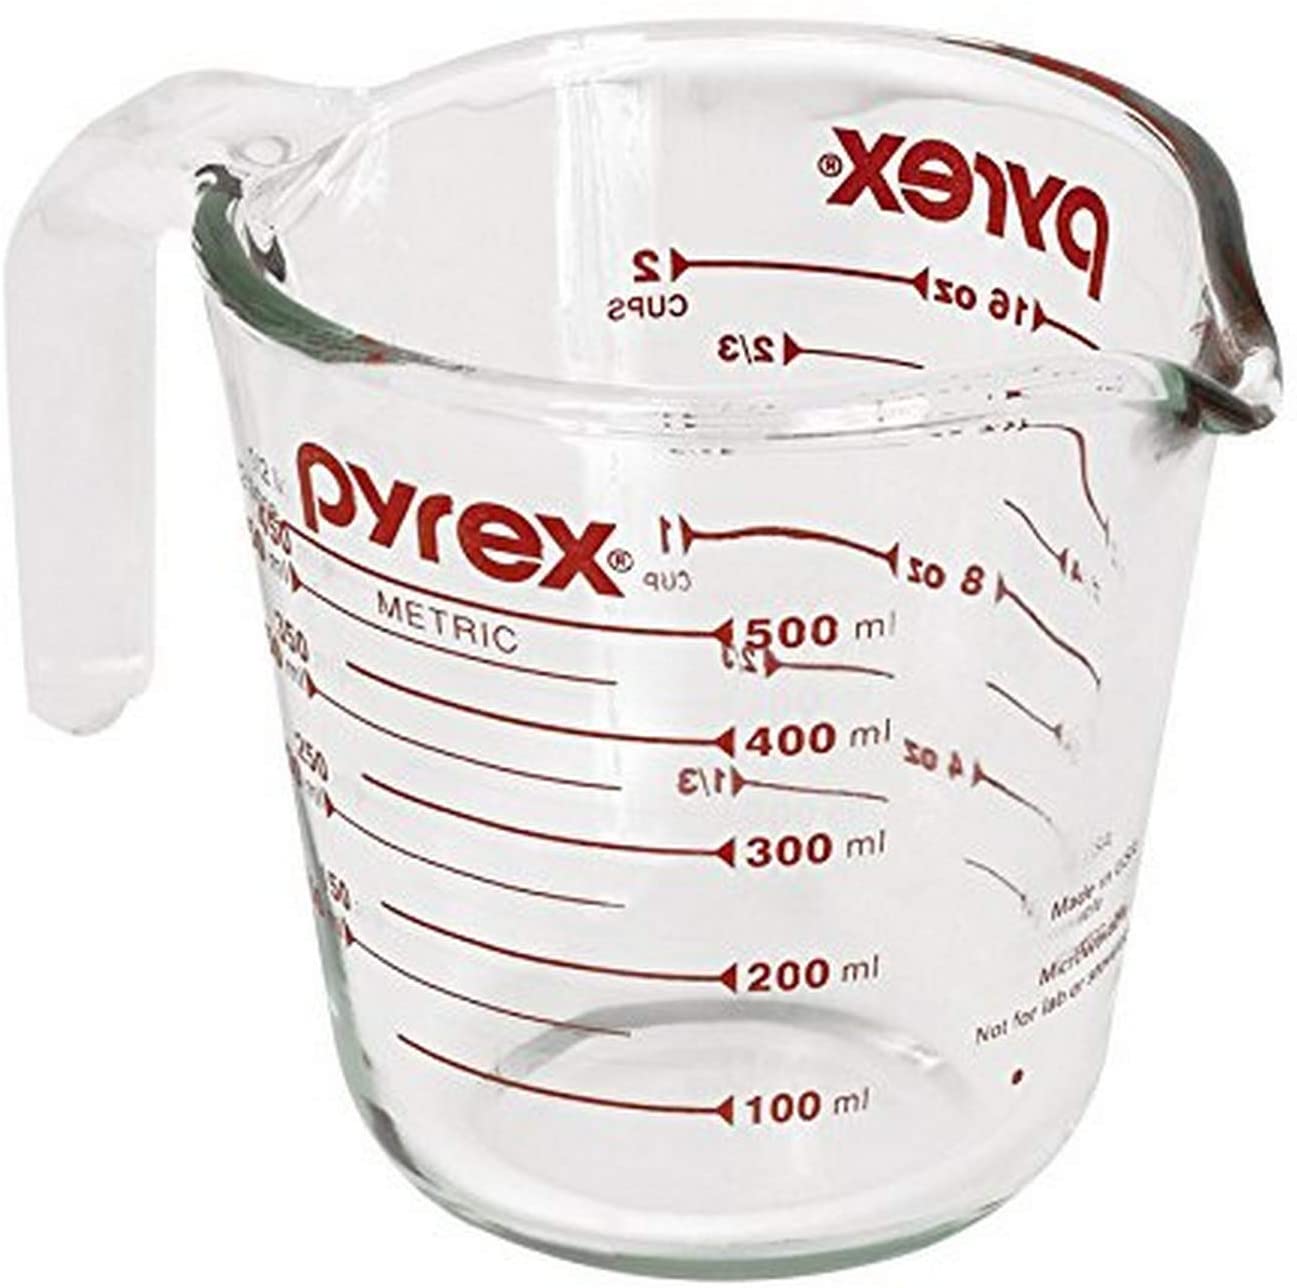 The best liquid measuring cup